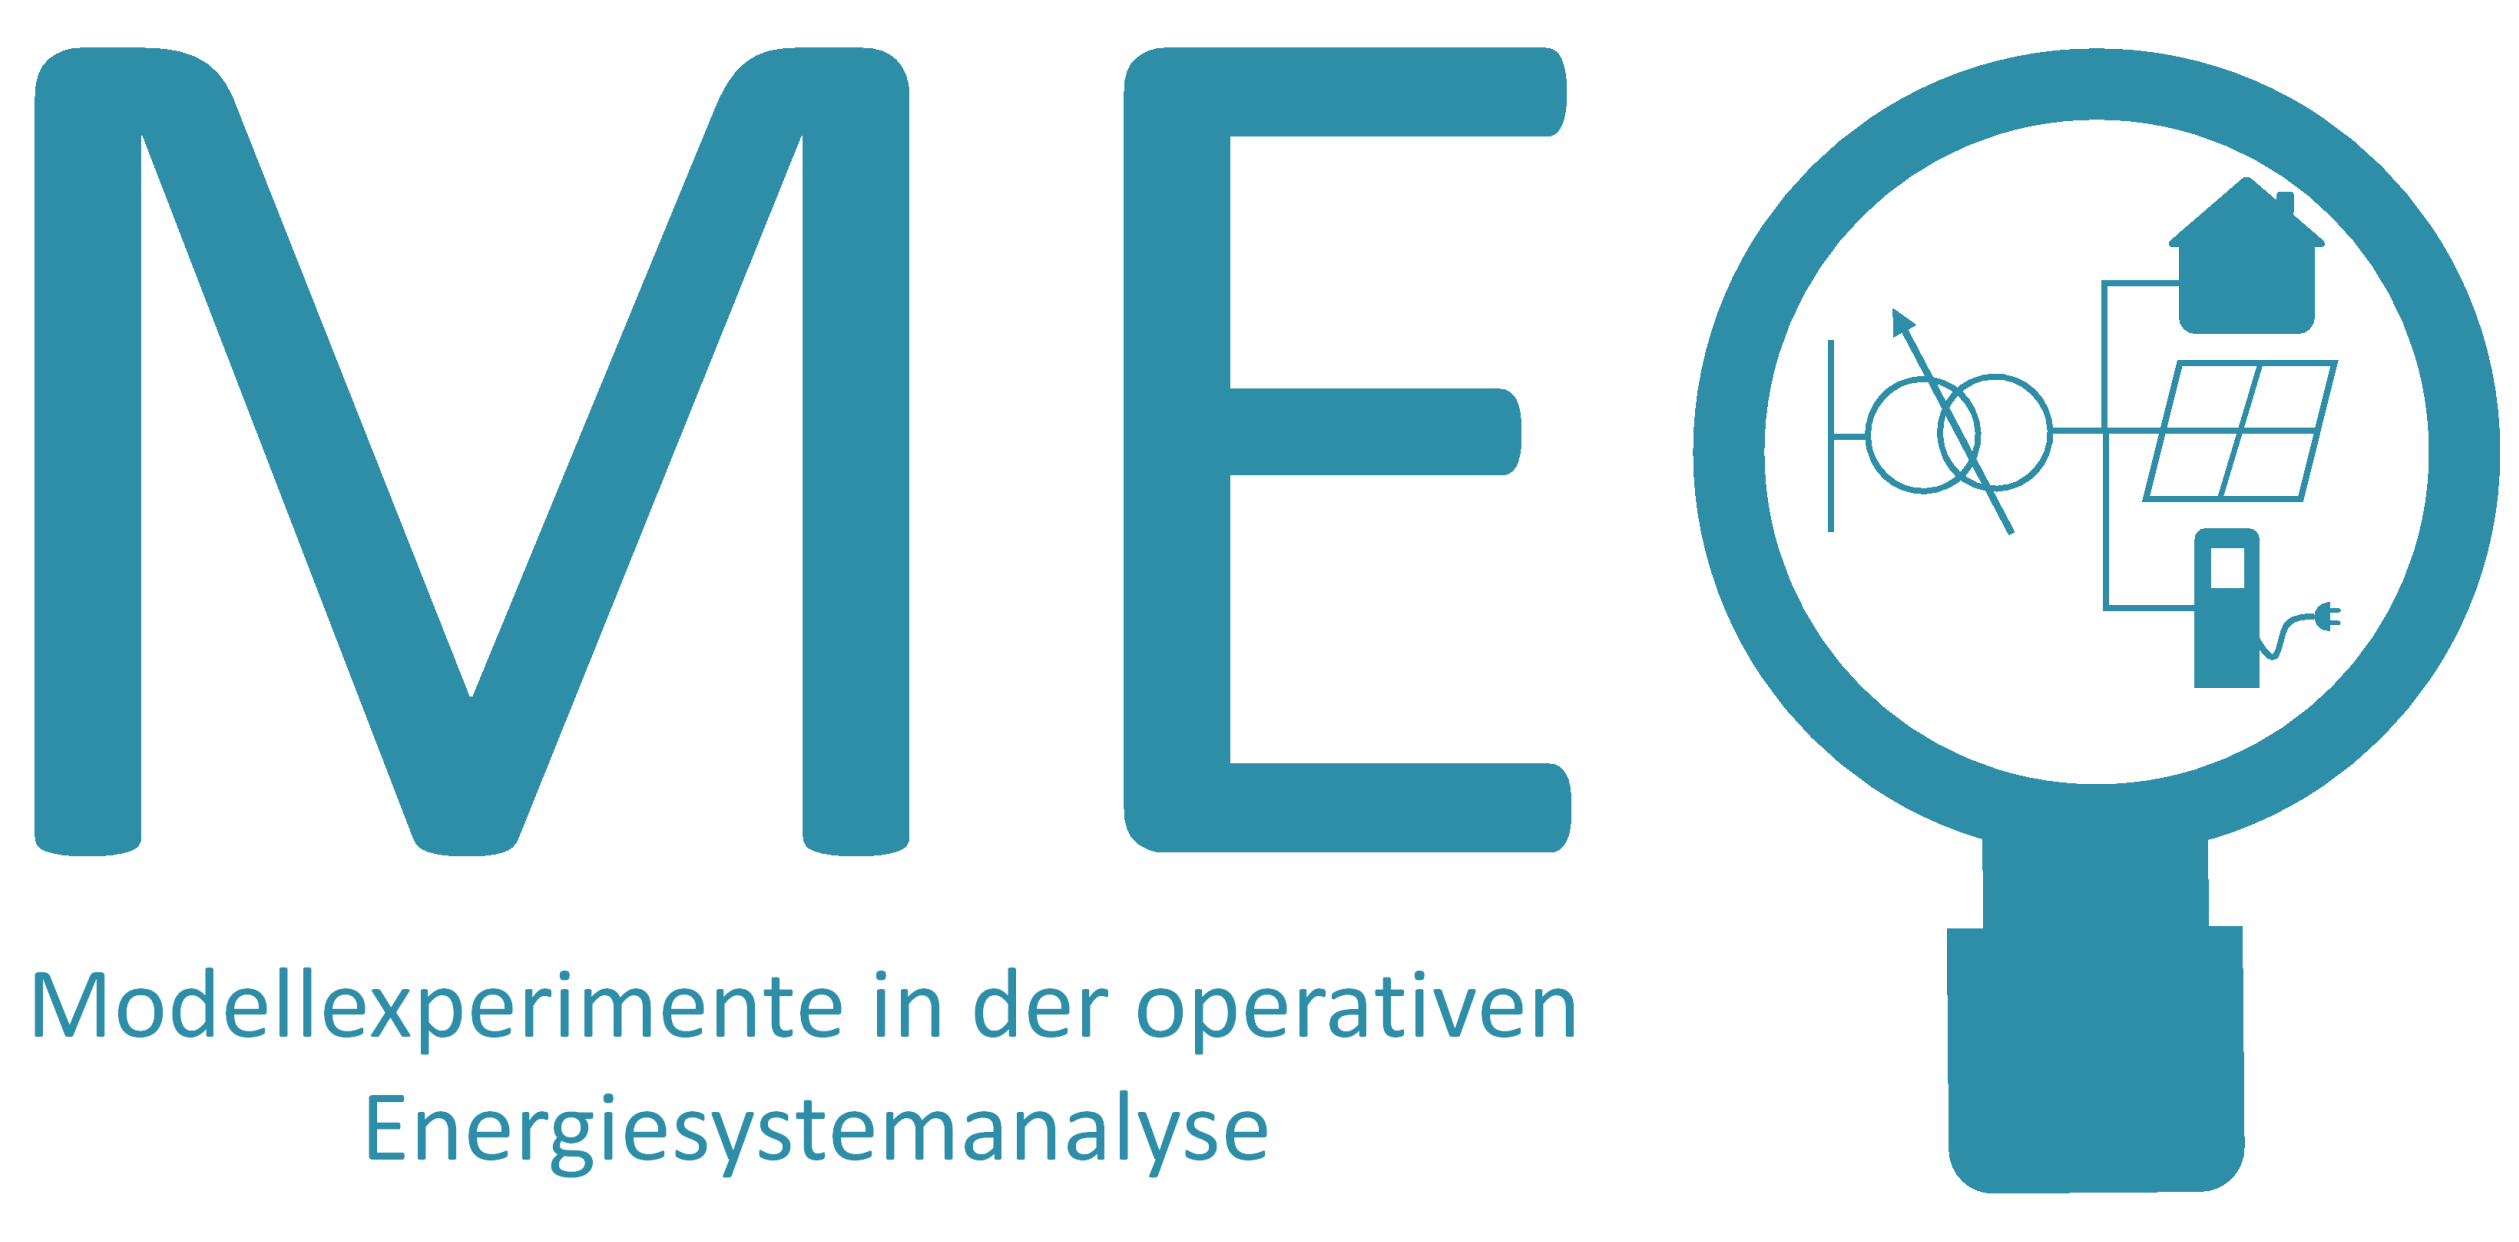 MEO Logo